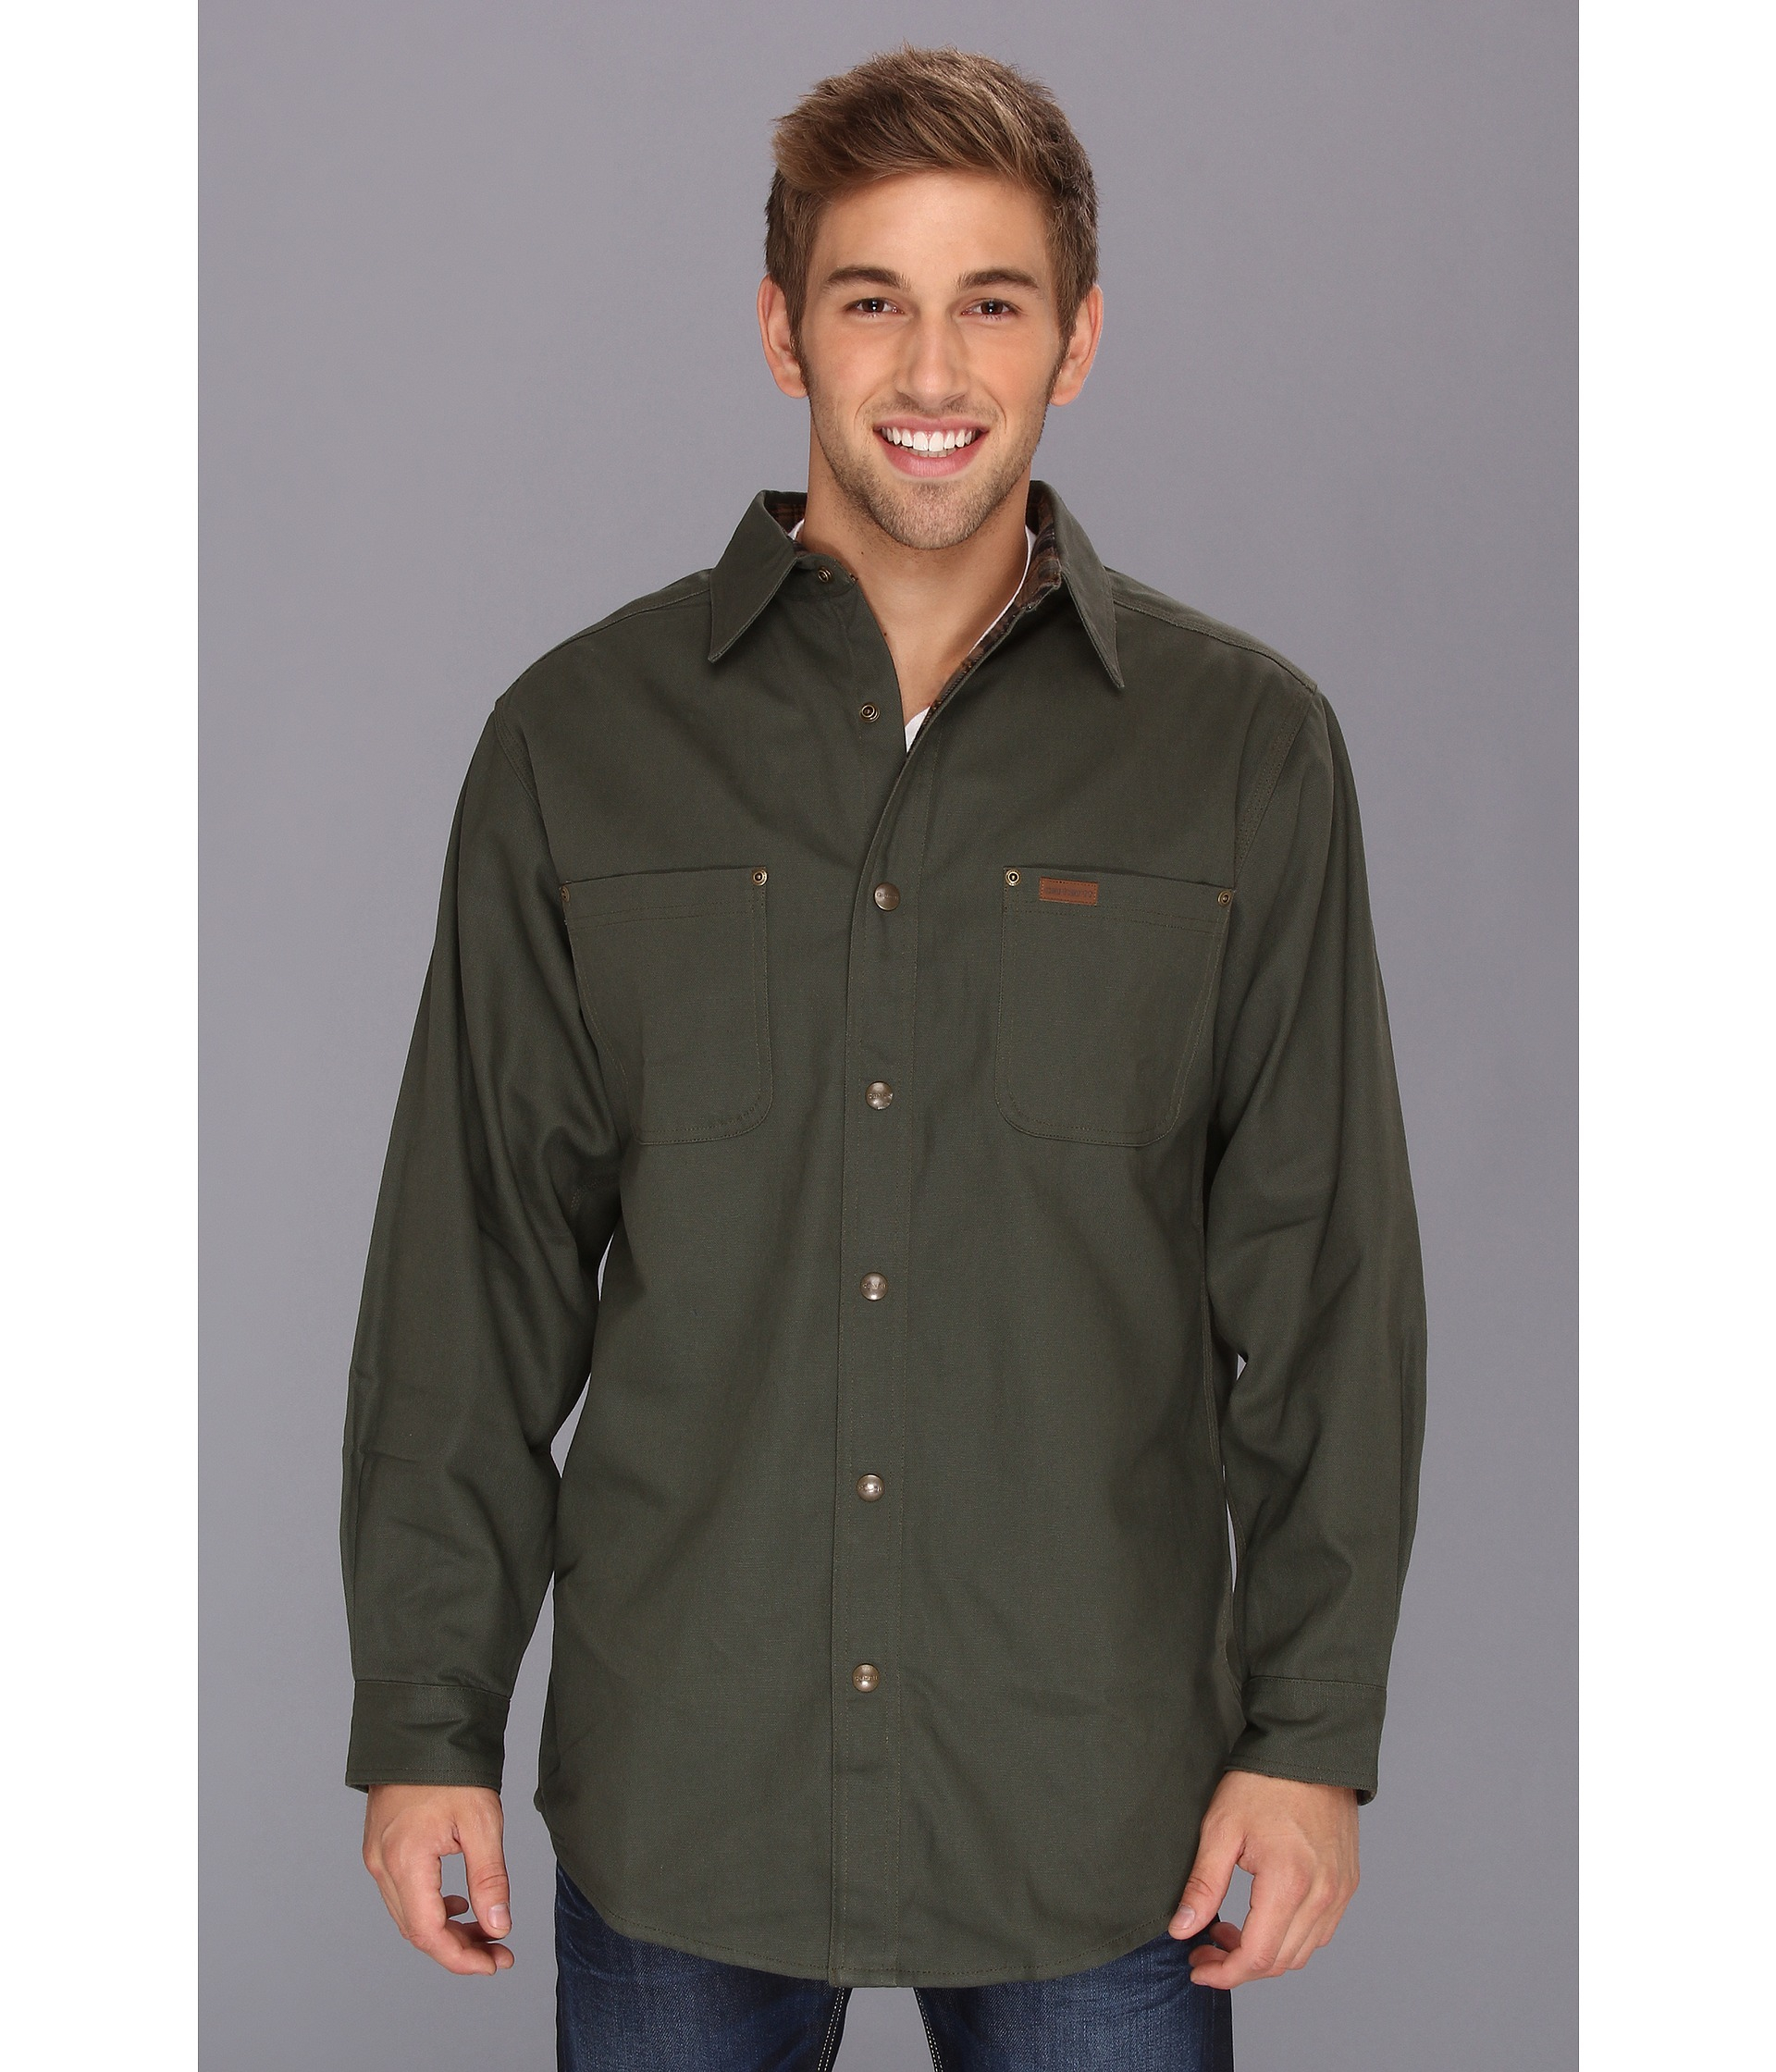 Carhartt Classic Canvas Shirt Jacket Tall in Moss (Green) for Men - Lyst